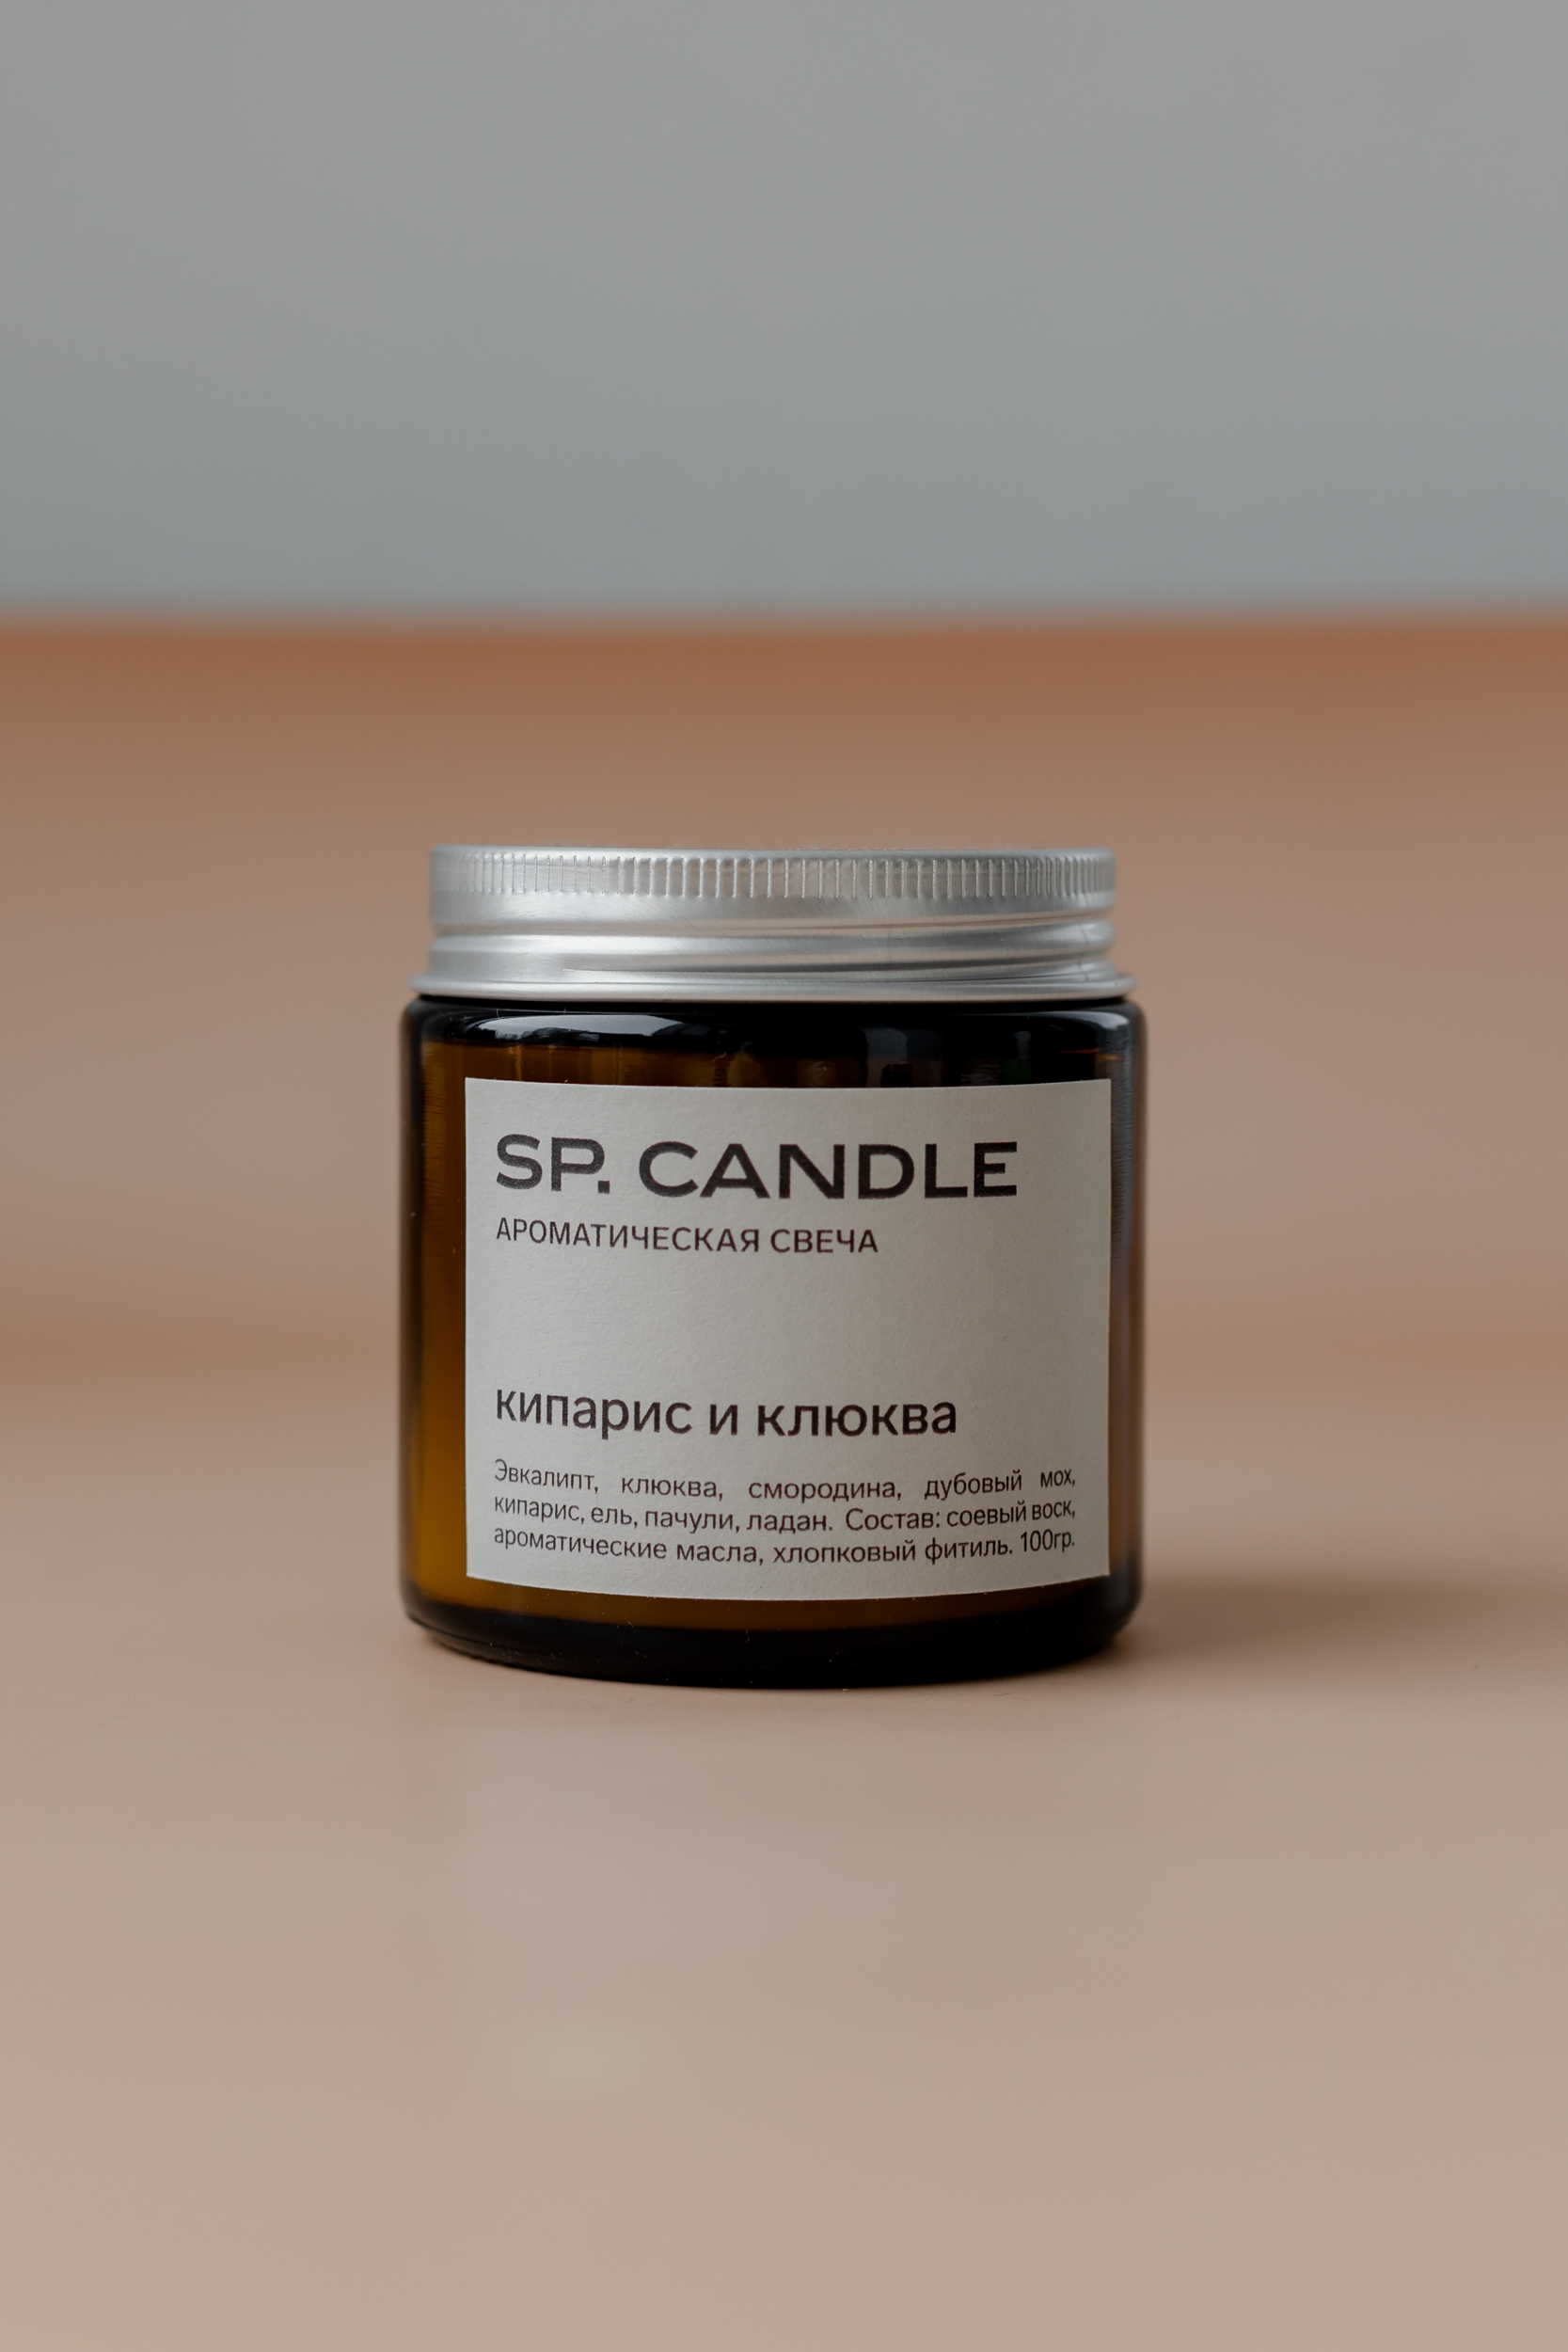 SP. CANDLE Ароматическая свеча Кипарис и клюква, 100г